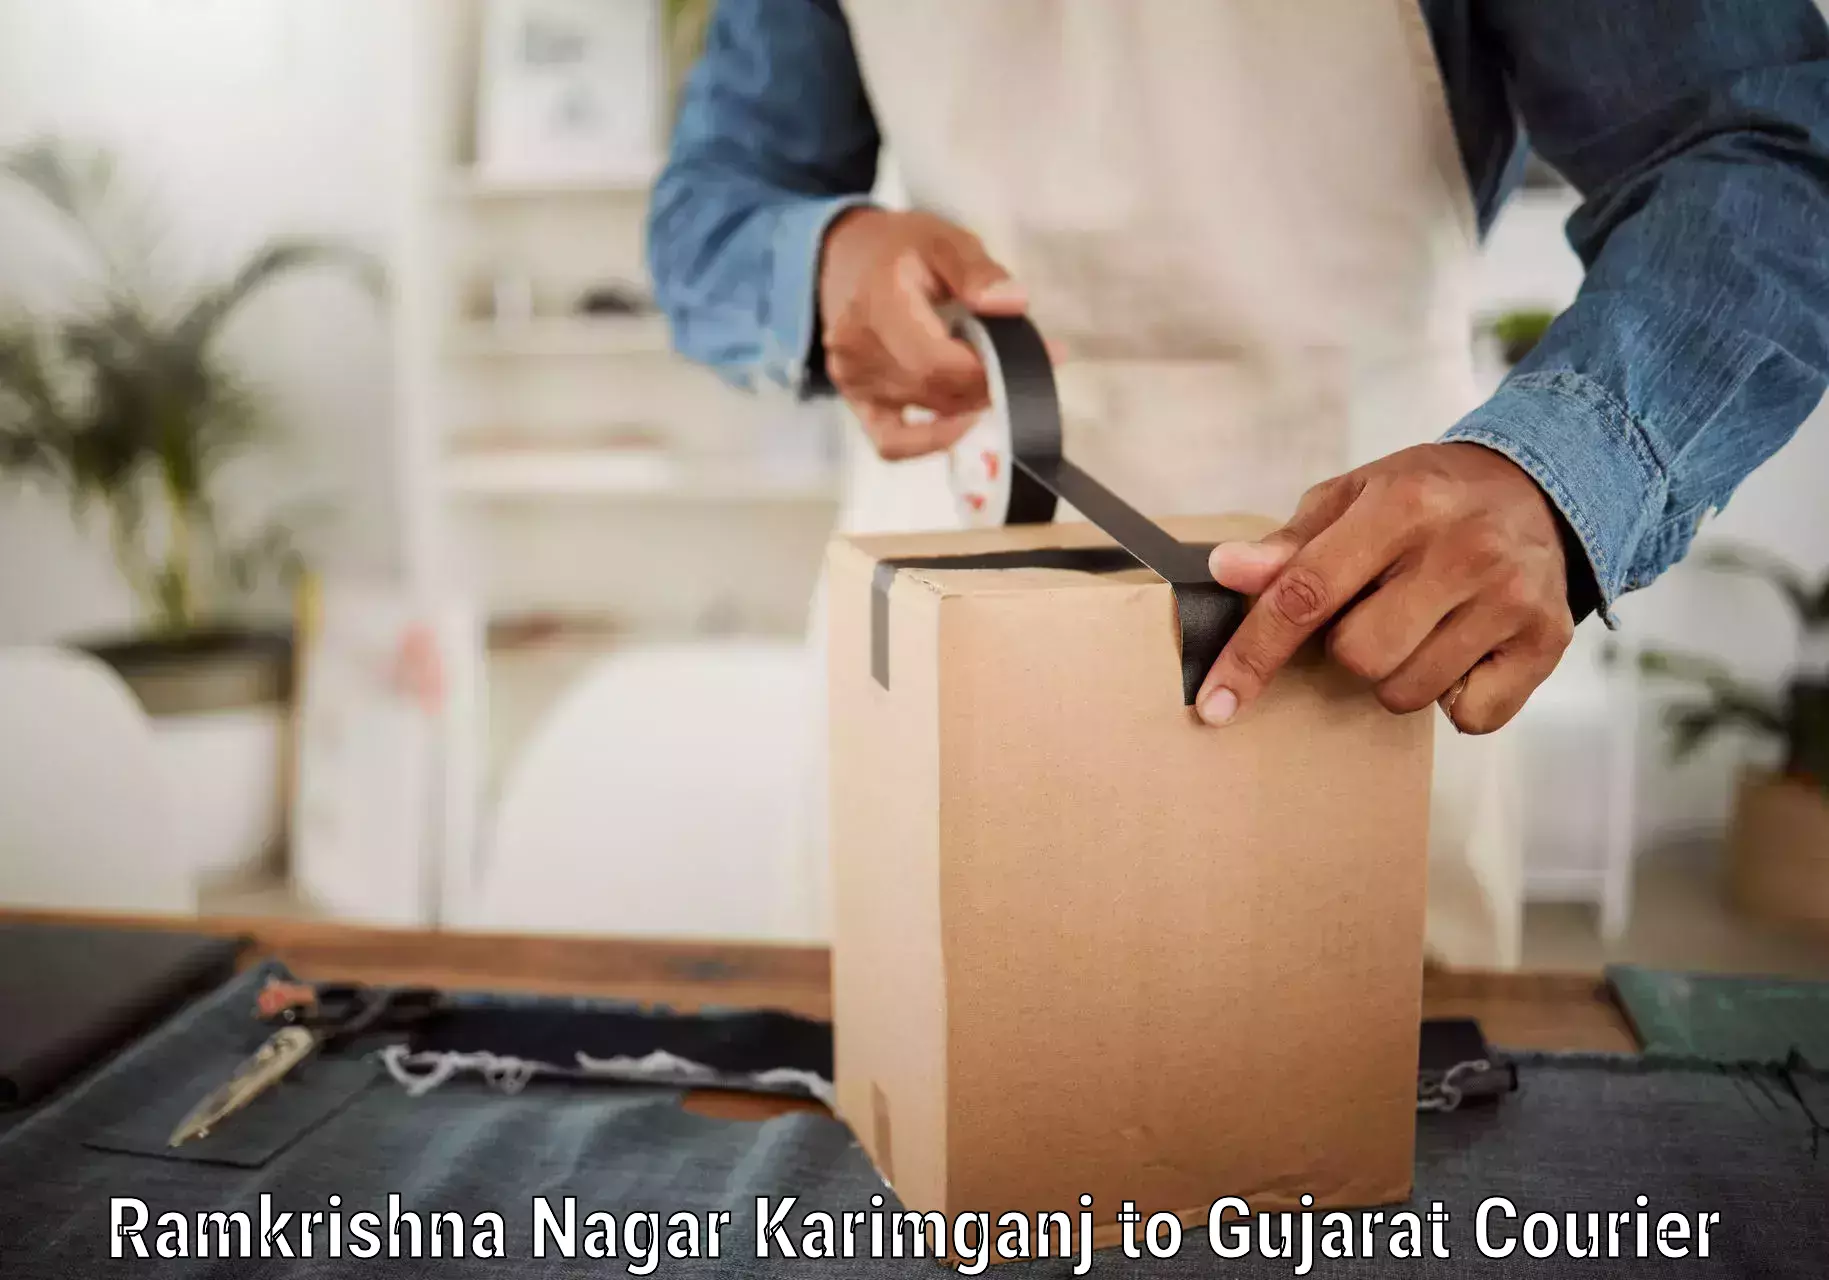 Express delivery solutions Ramkrishna Nagar Karimganj to GIDC